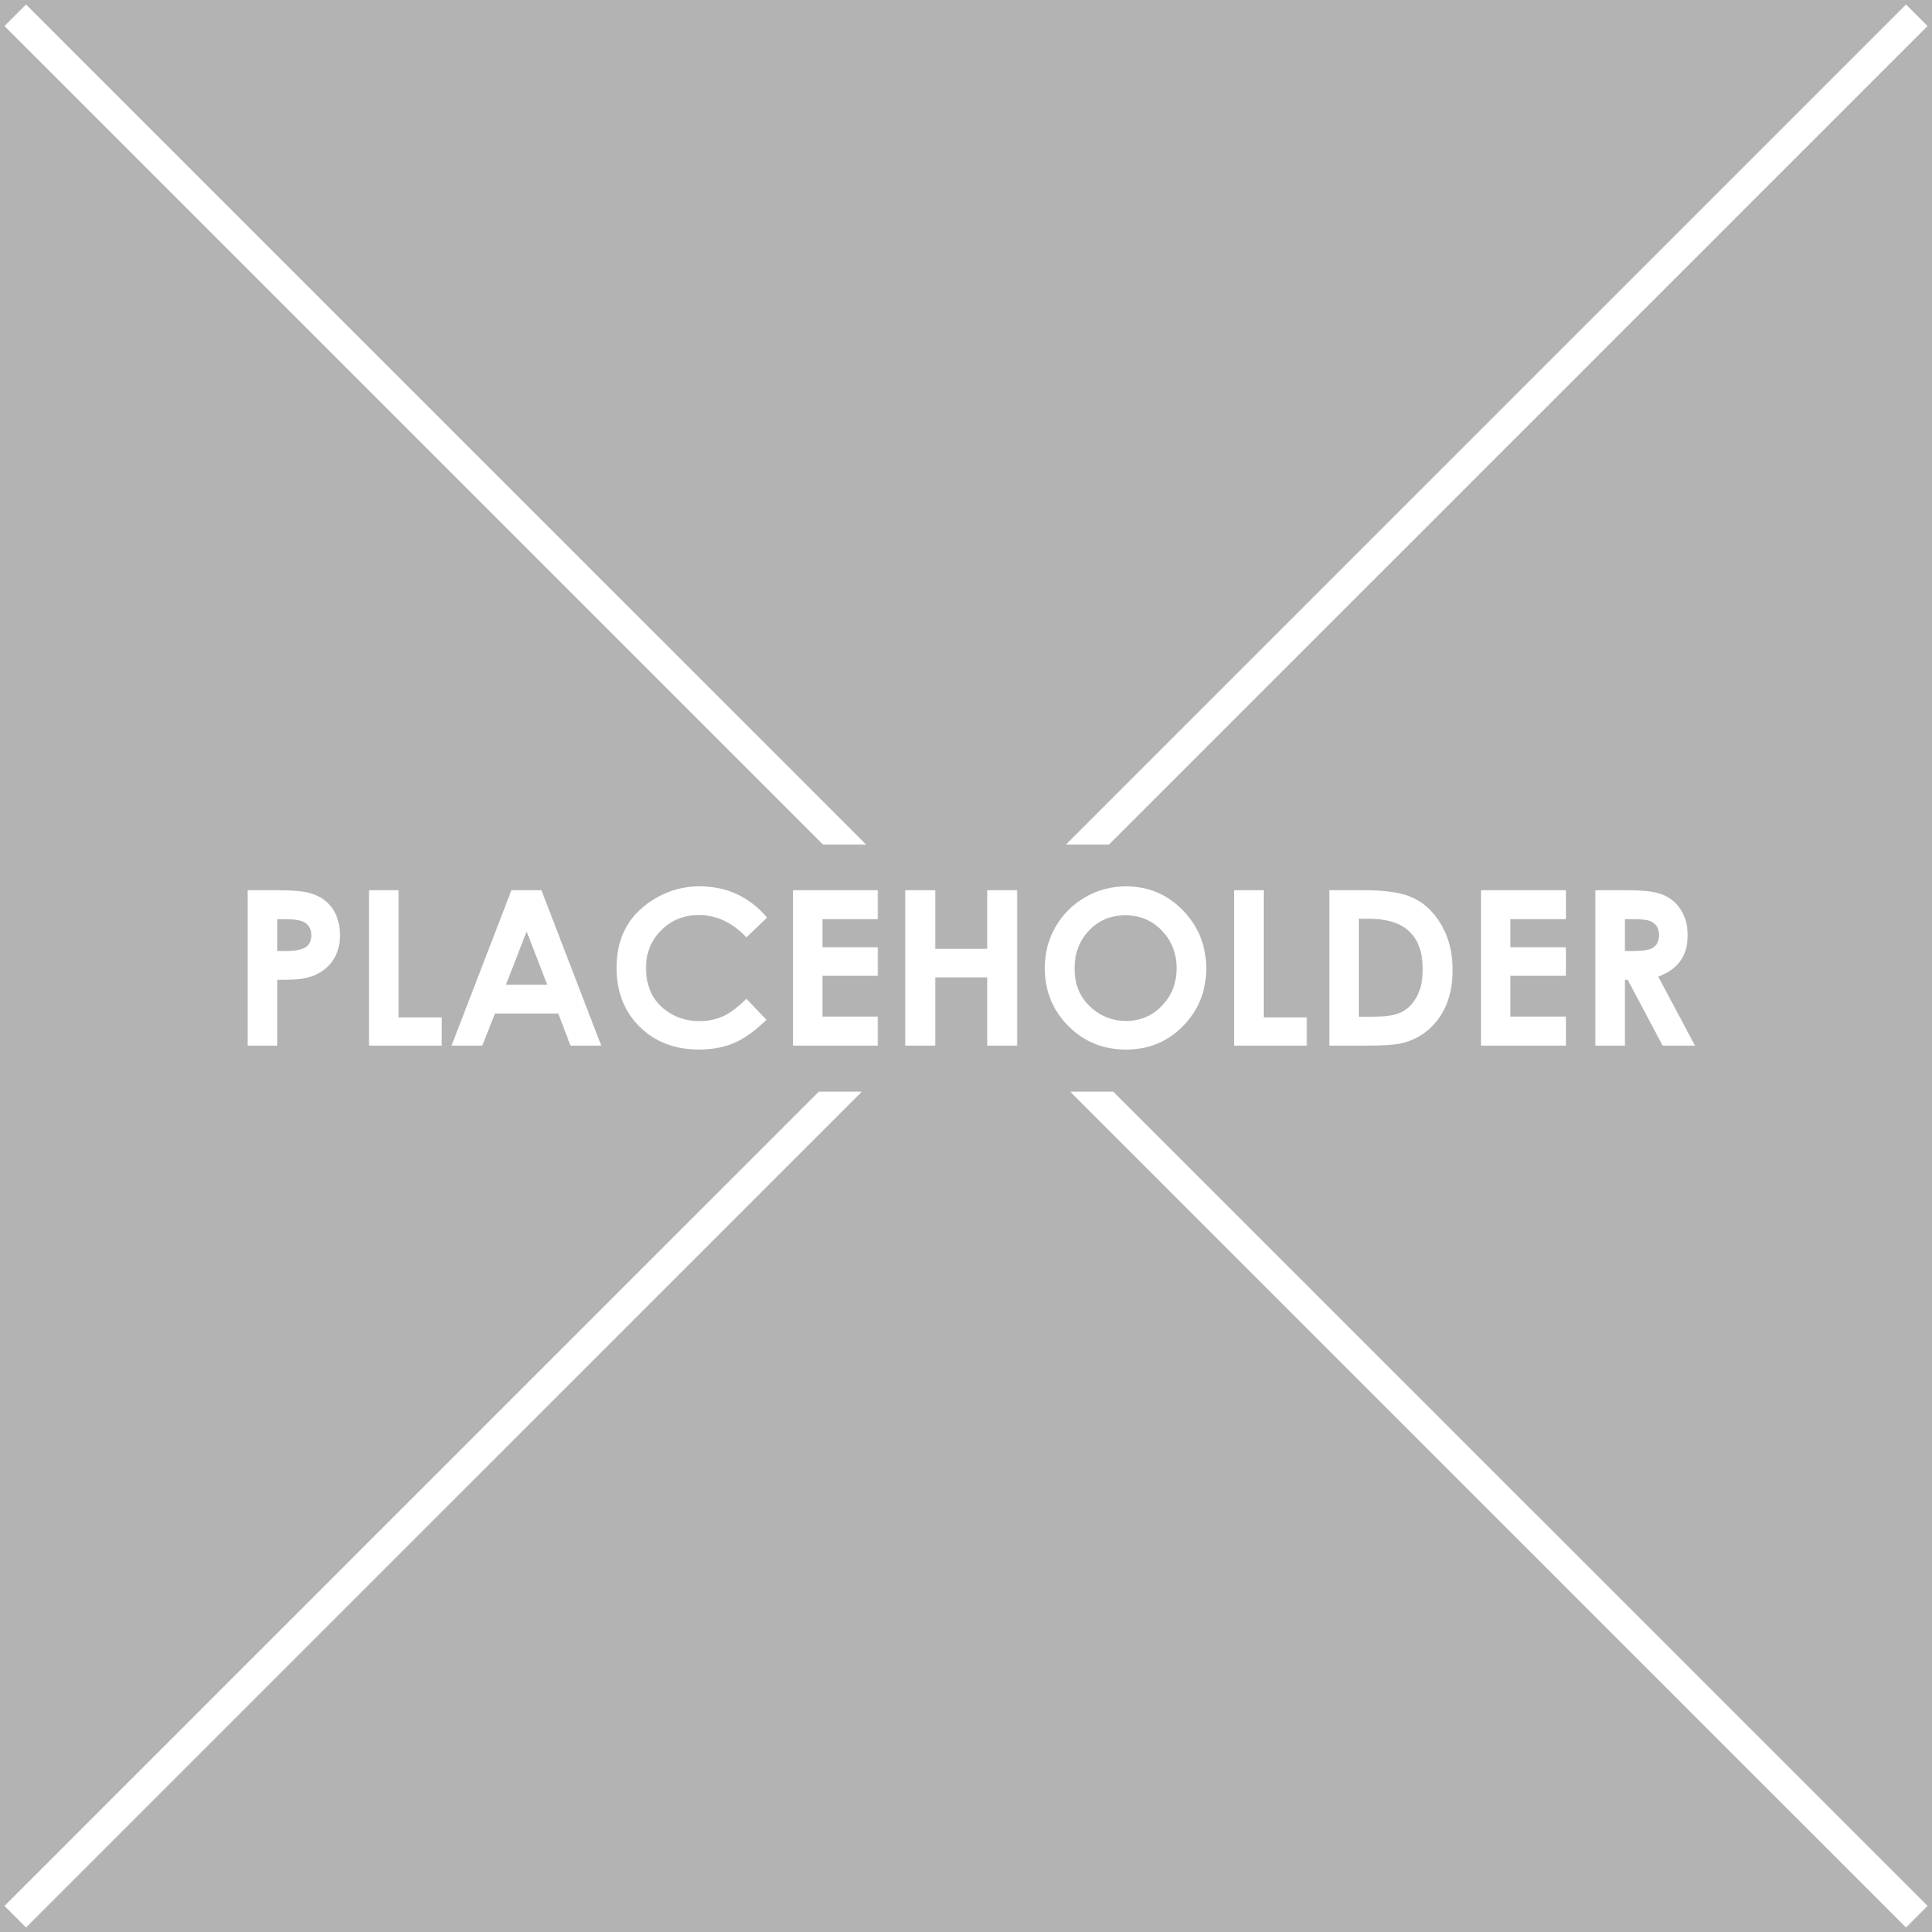 Placeholder copy 2.png